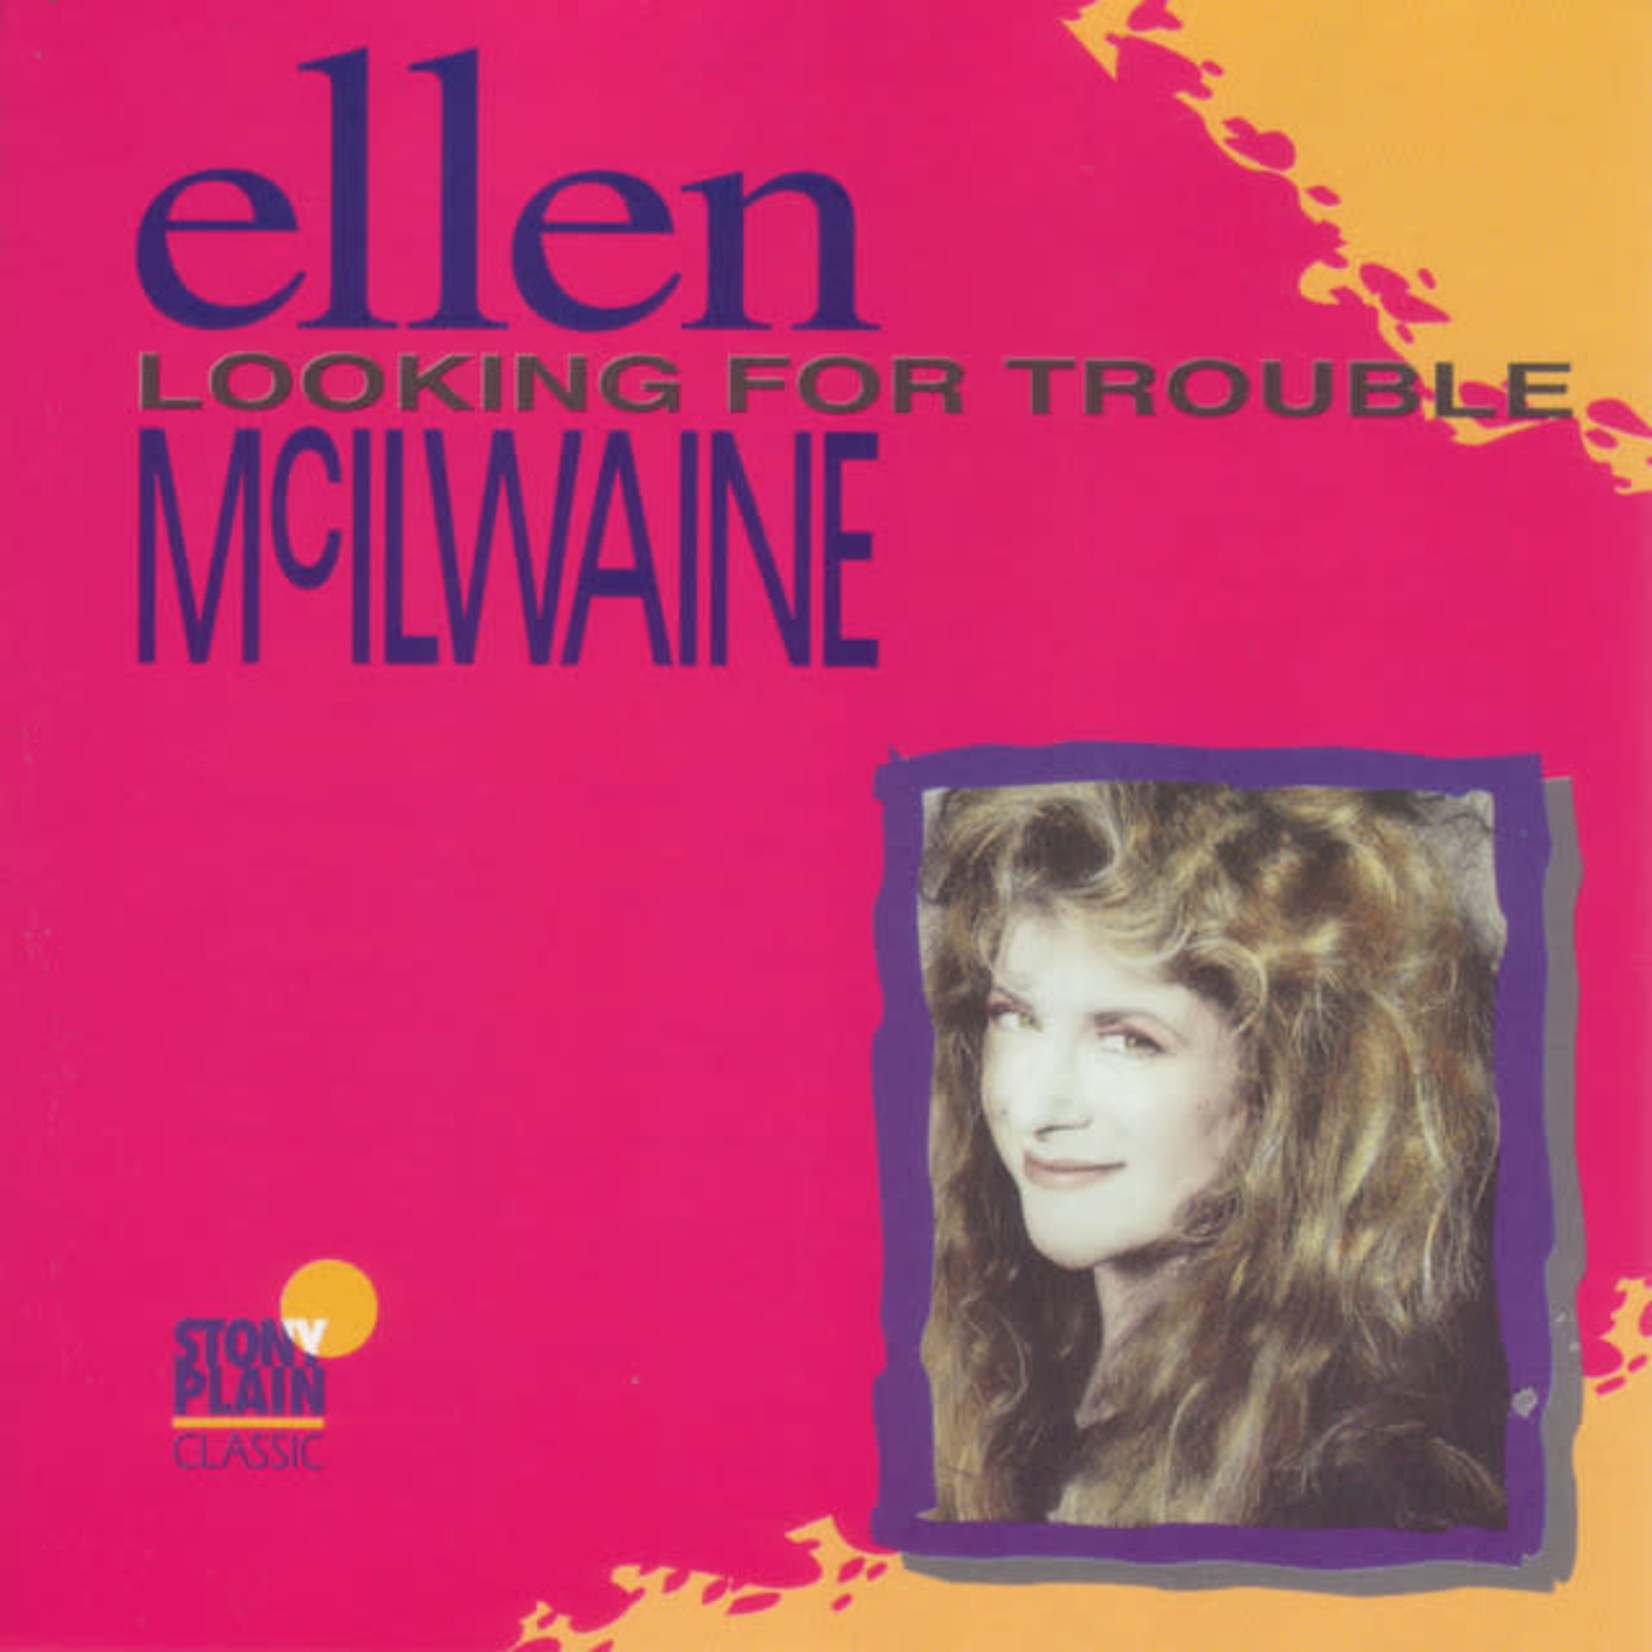 [Vintage] Ellen McIlwaine - Looking For Trouble